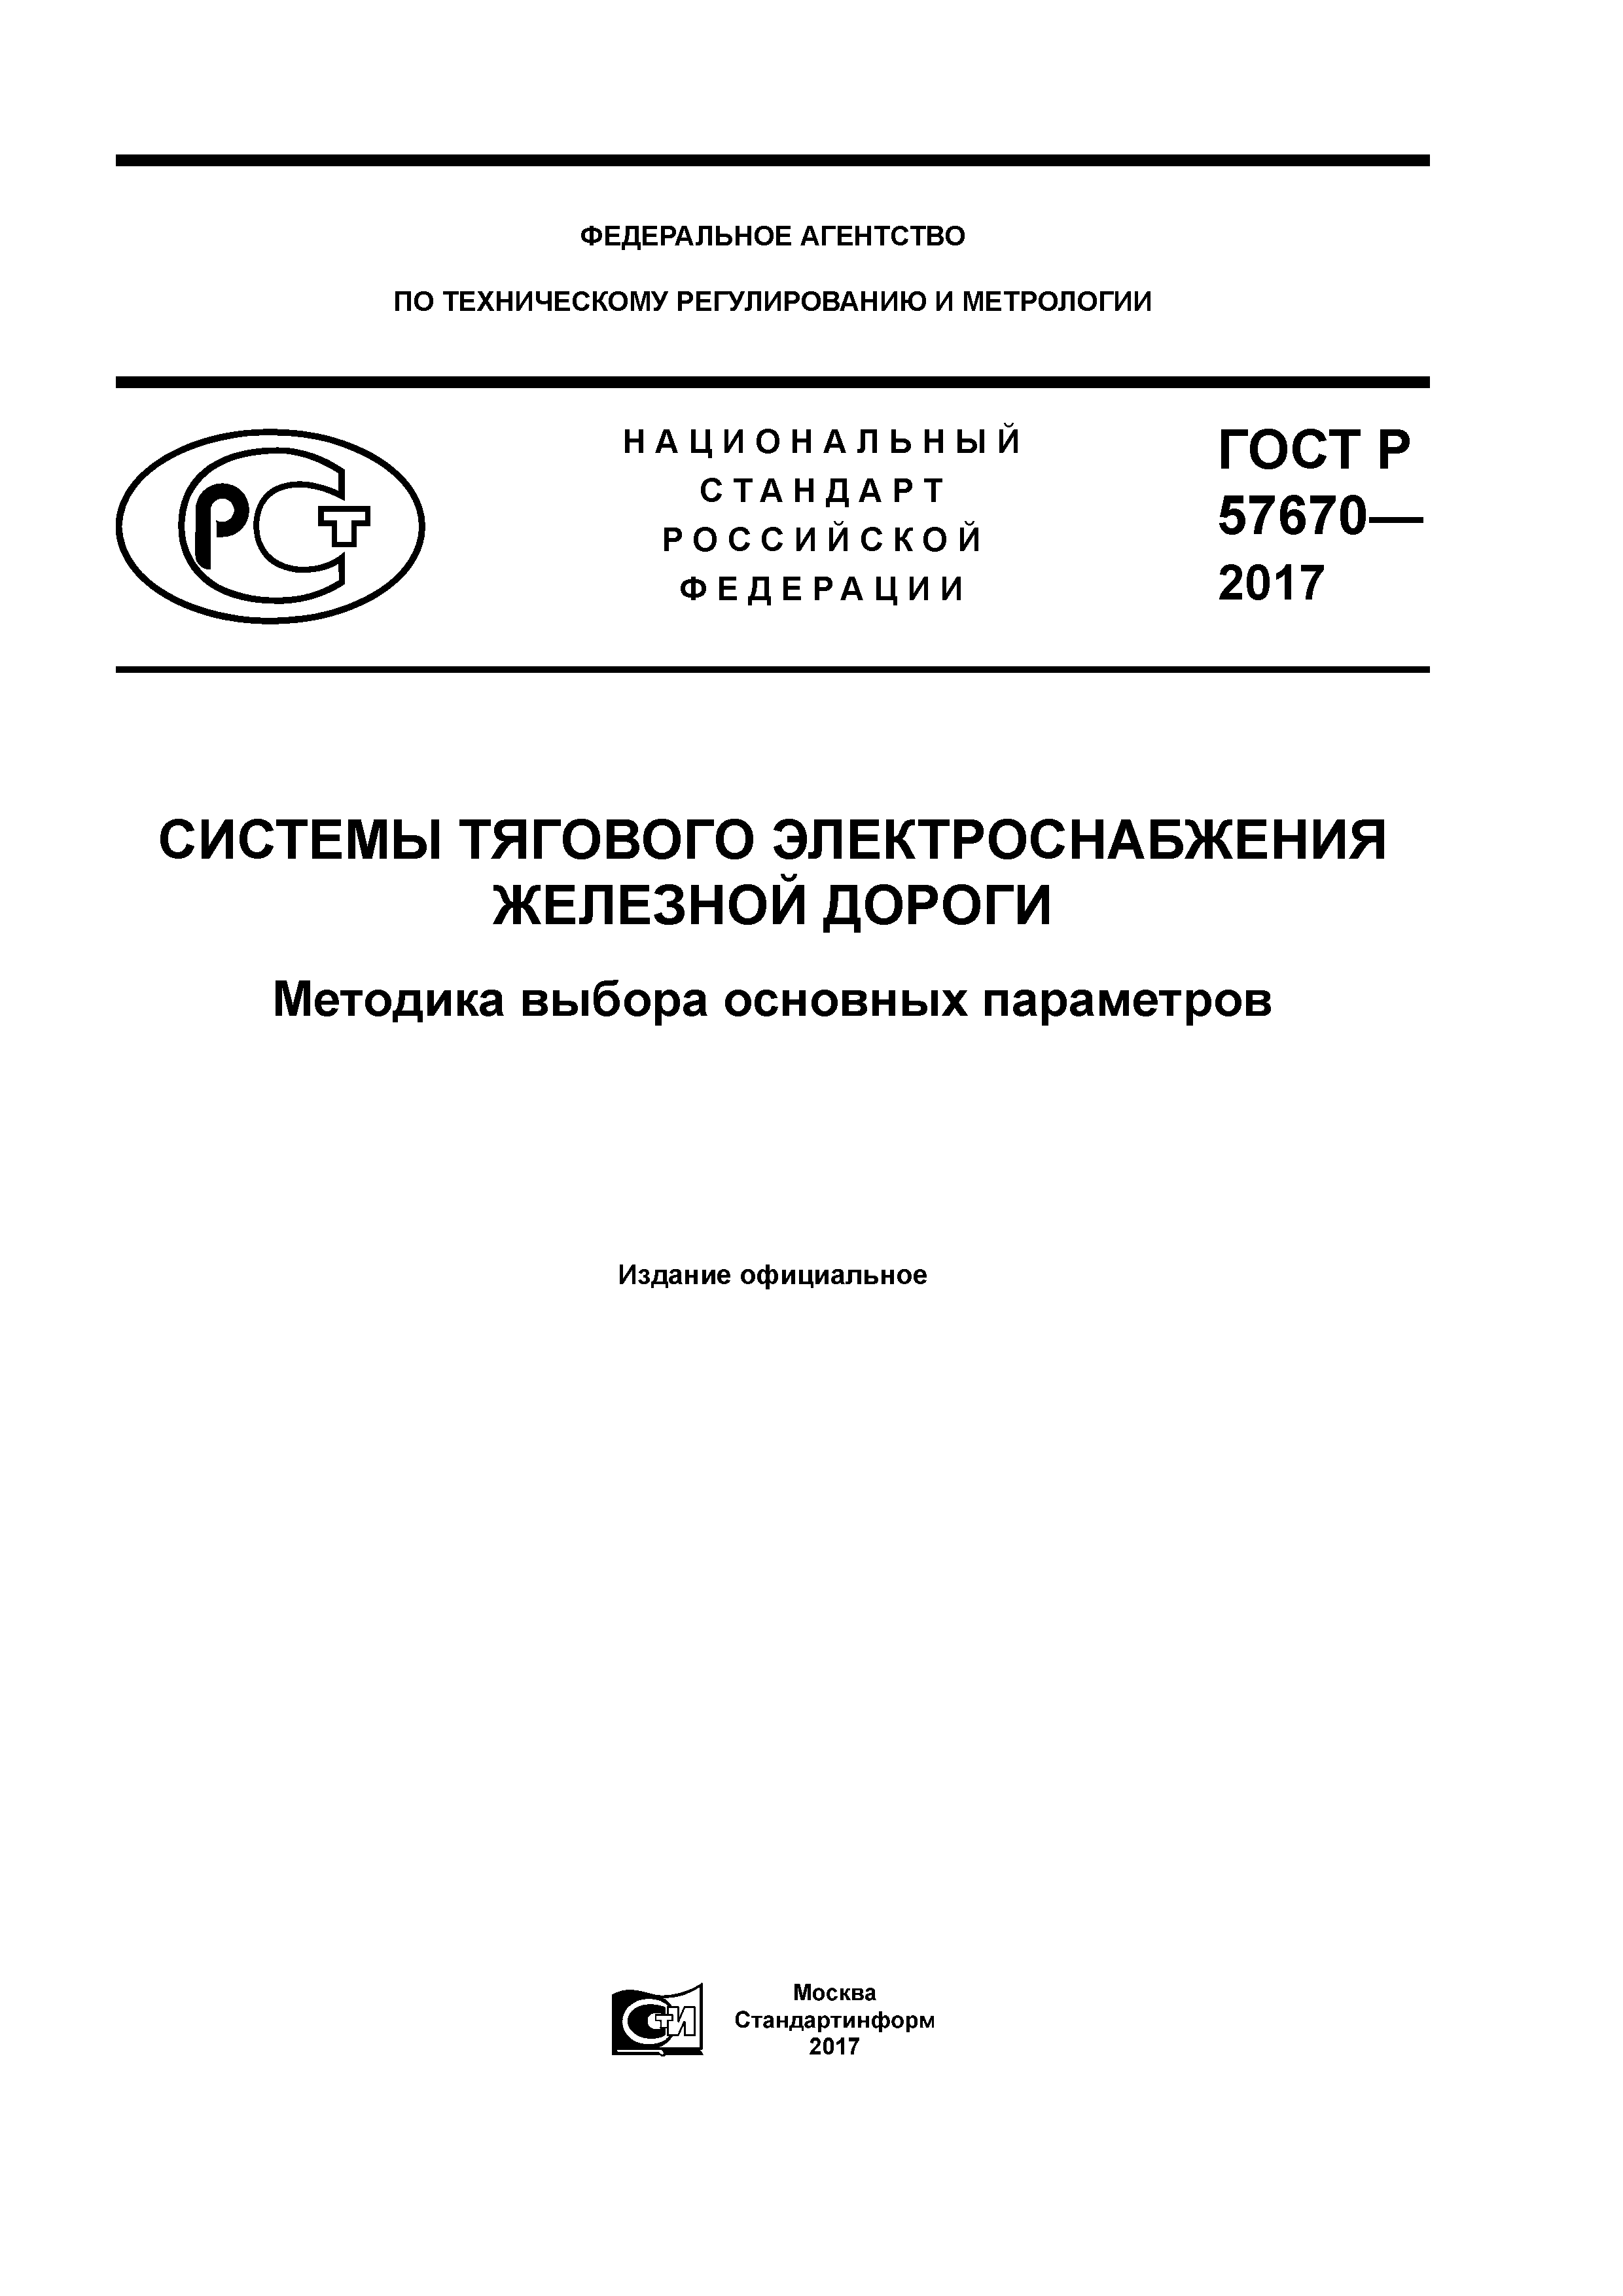 ГОСТ Р 57670-2017